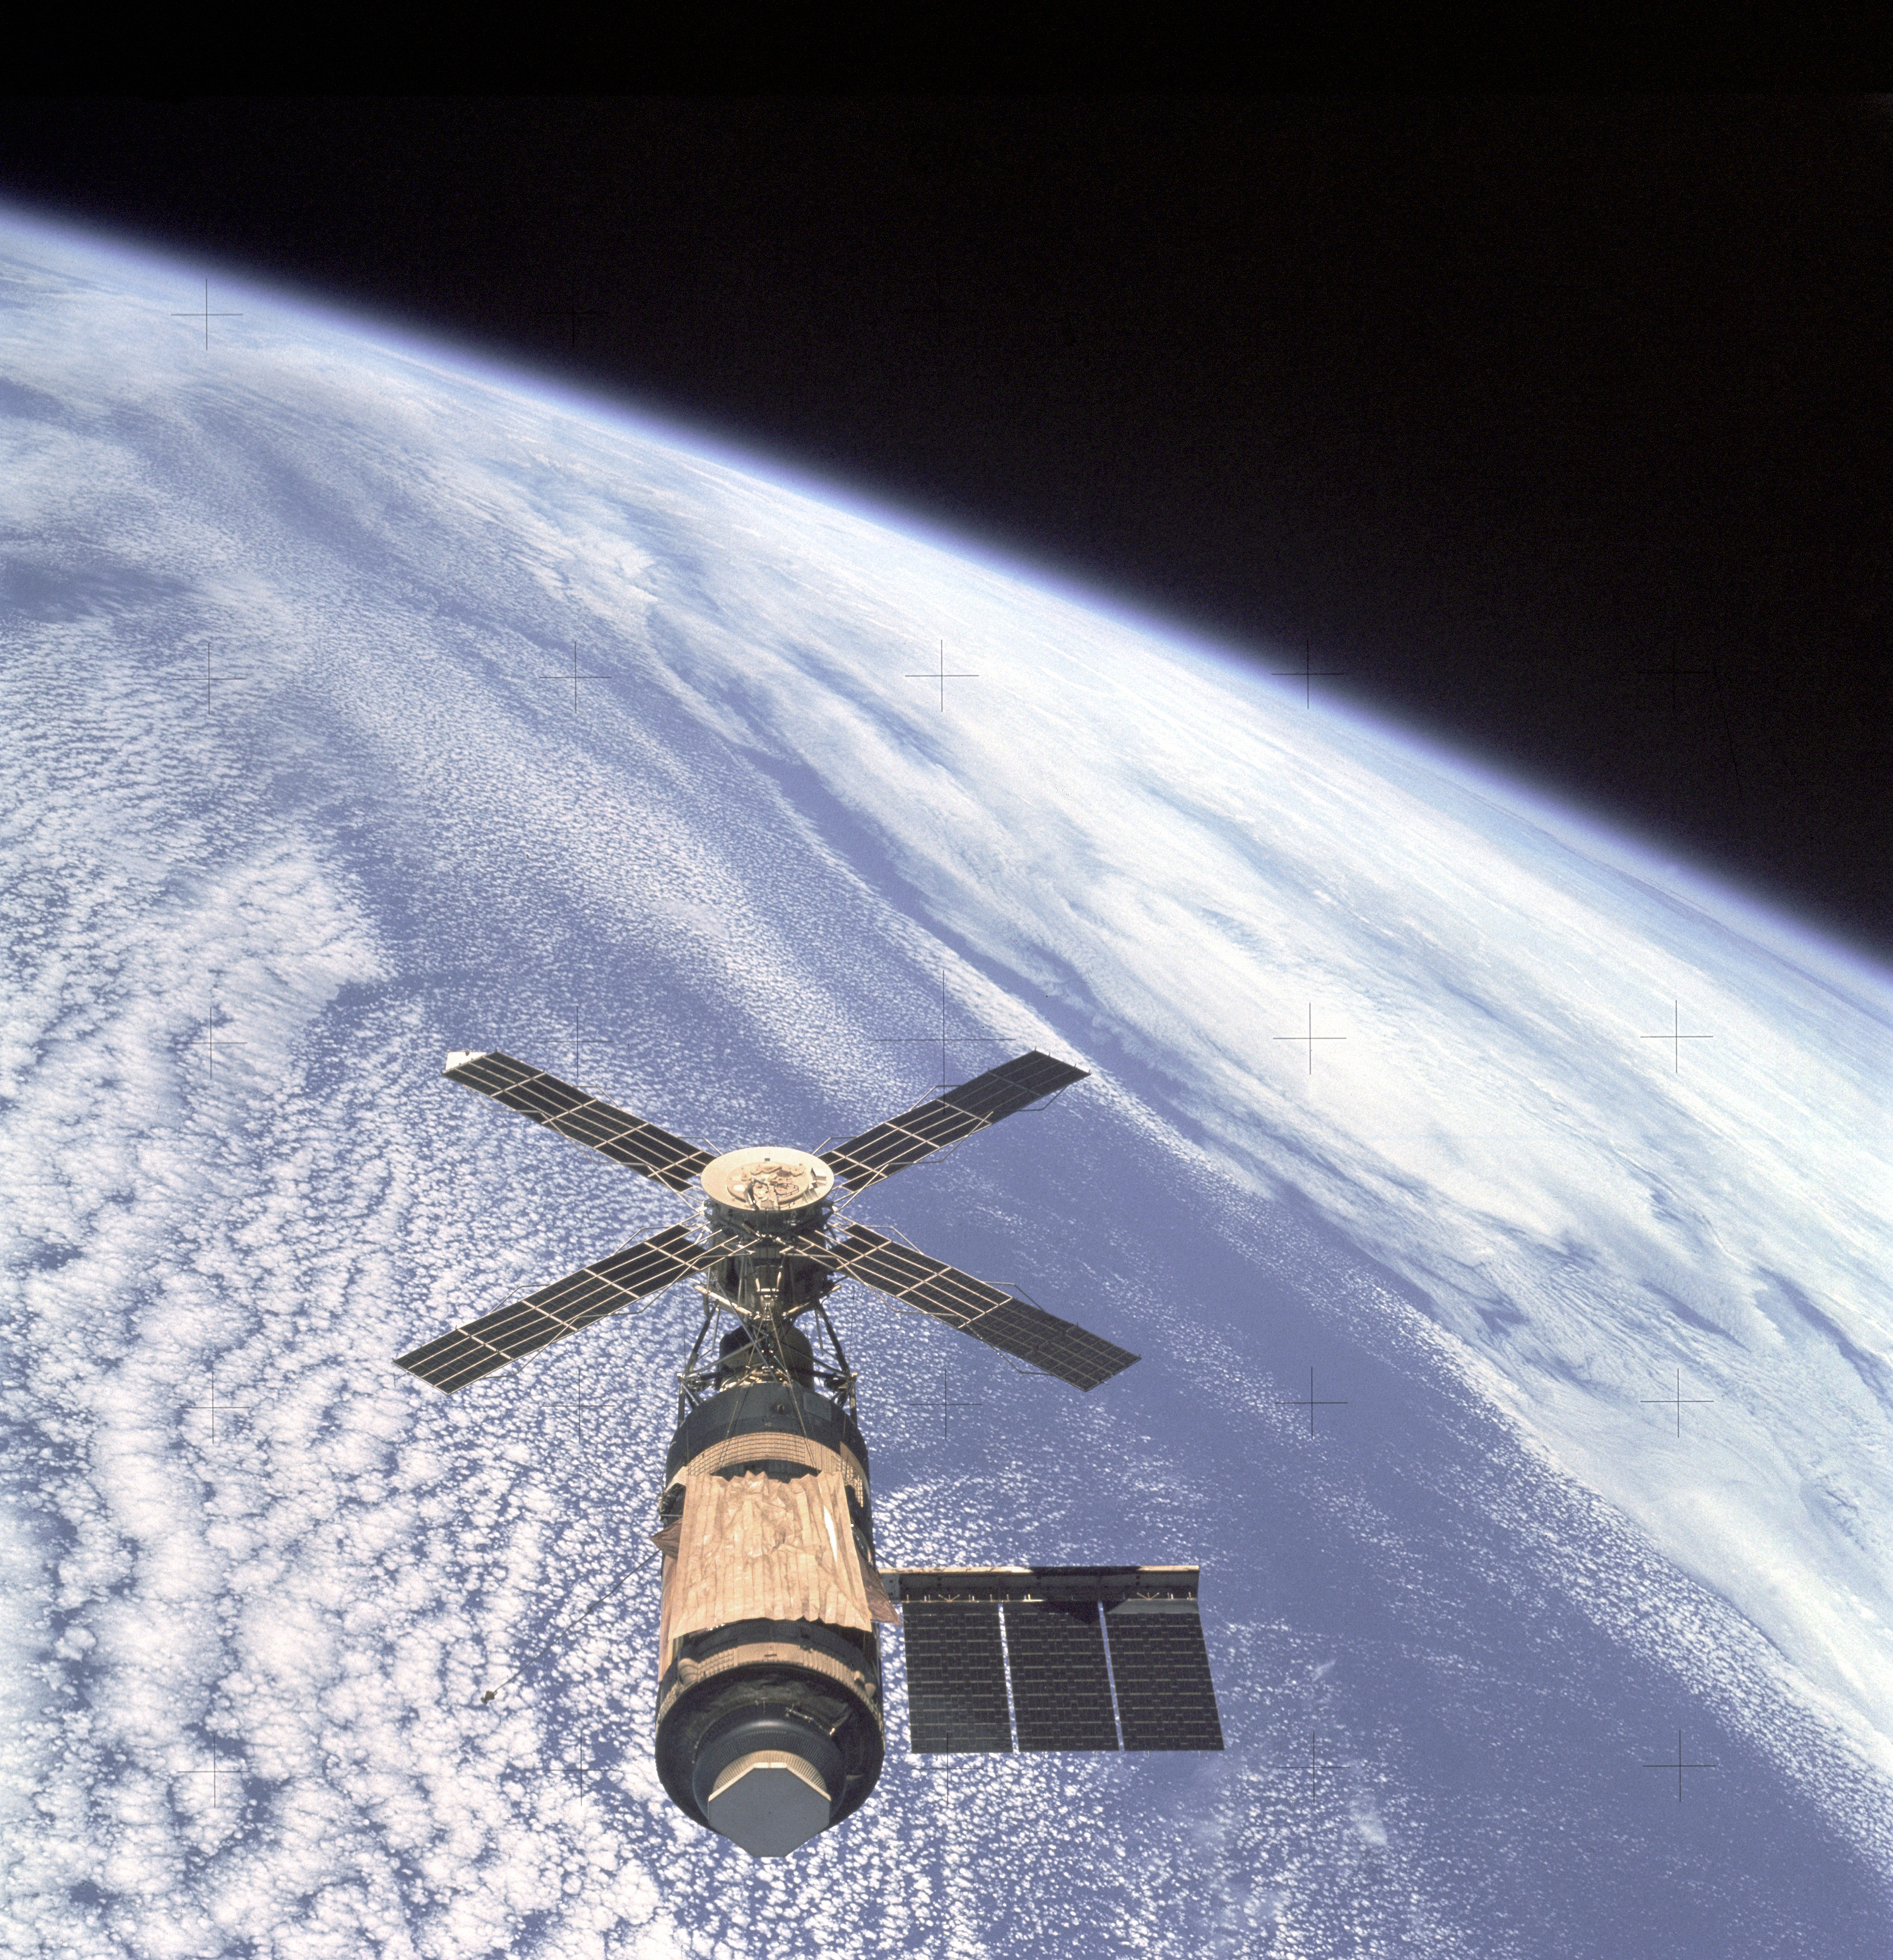 Skylab and Earth Limb - GPN-2000-001055